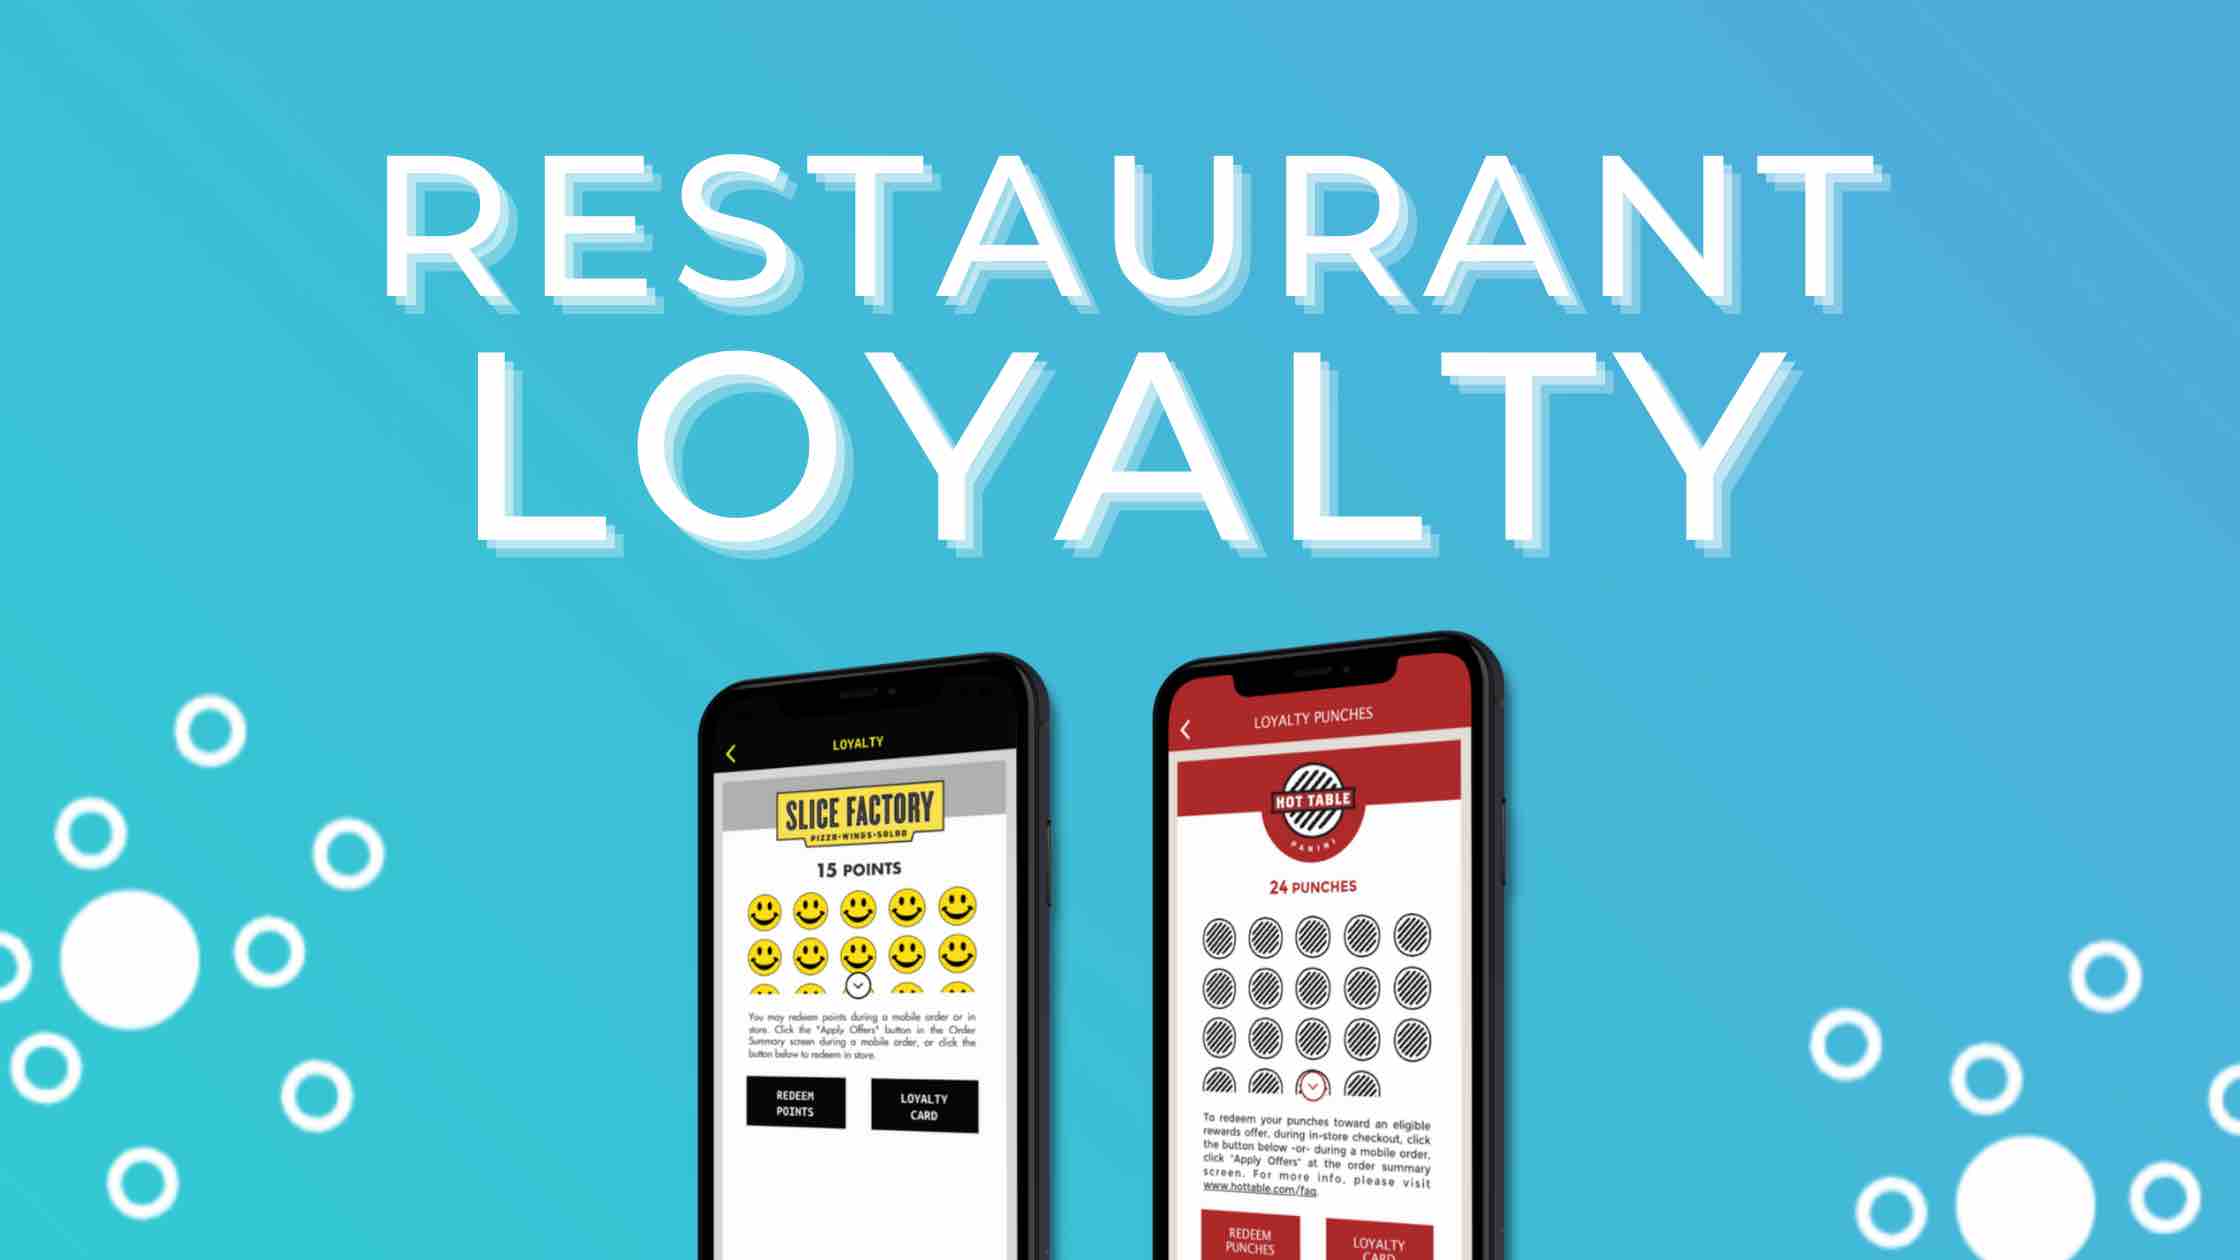 Restaurant loyalty banner design